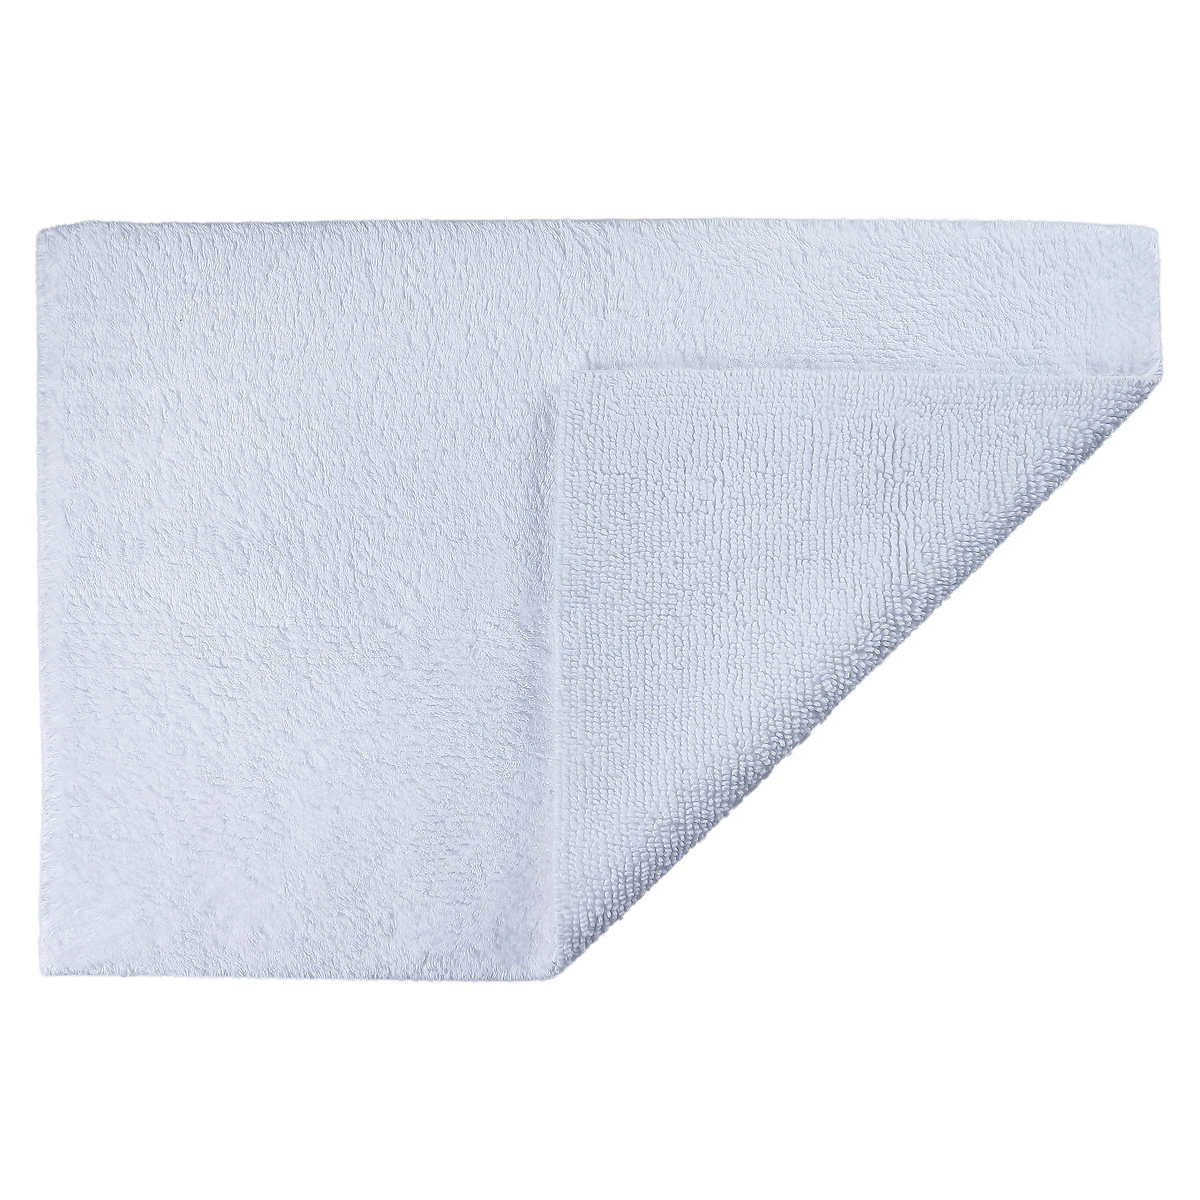 Purely Indulgent Egyptian Cotton Bath Towels